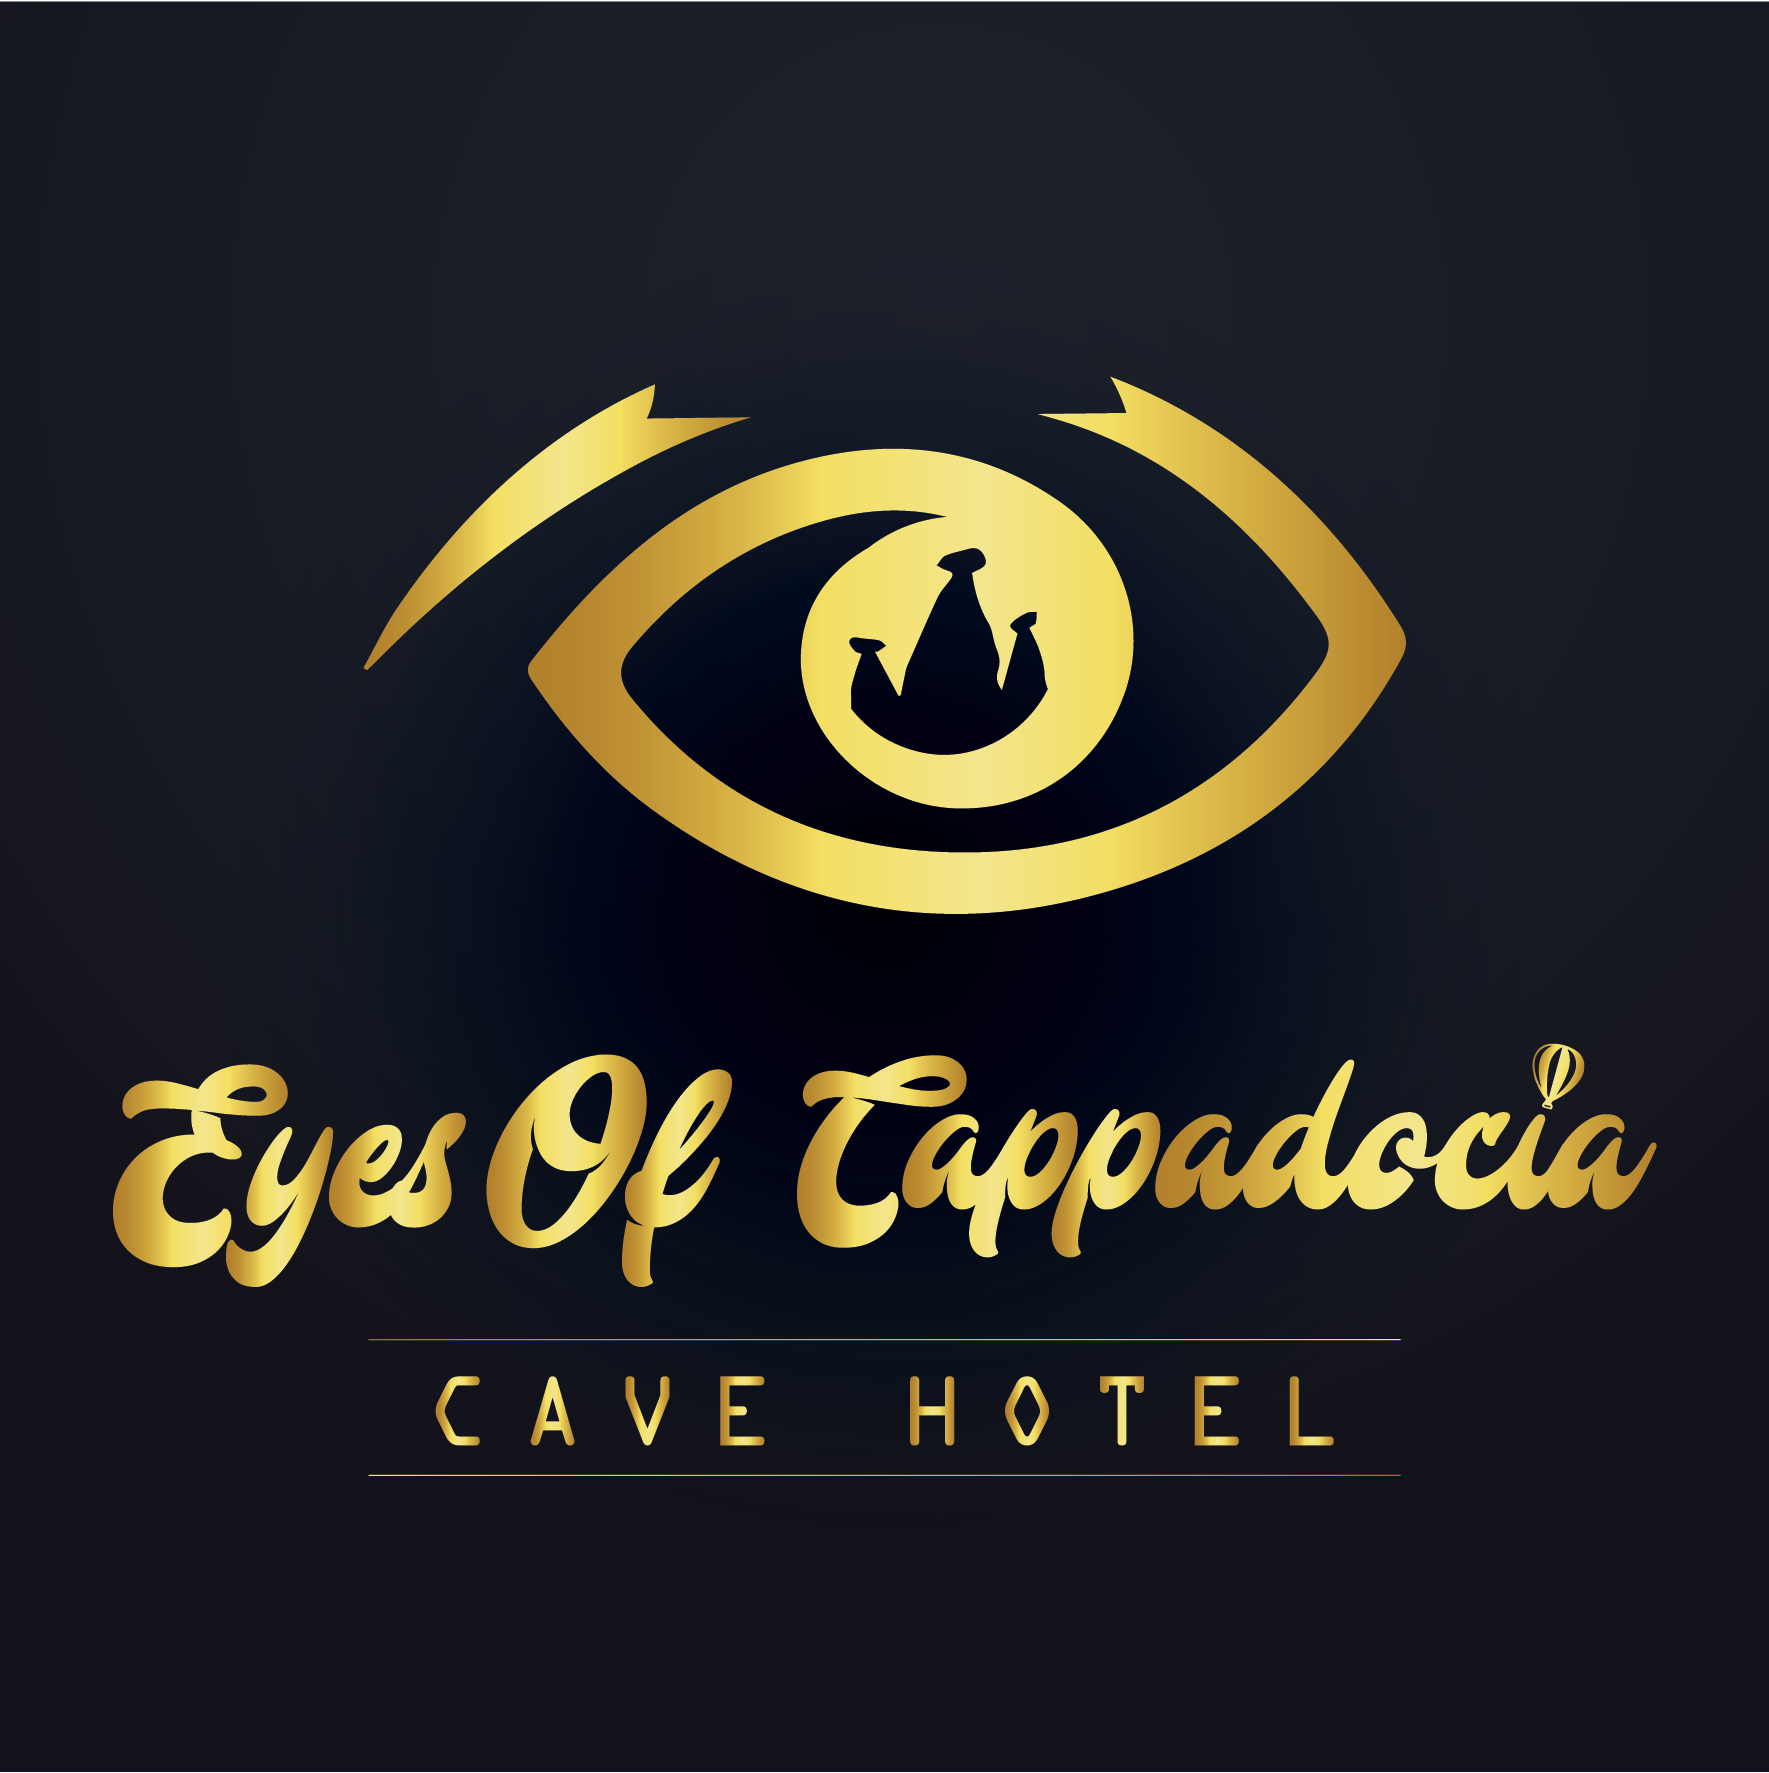 Eyes of Cappadocia